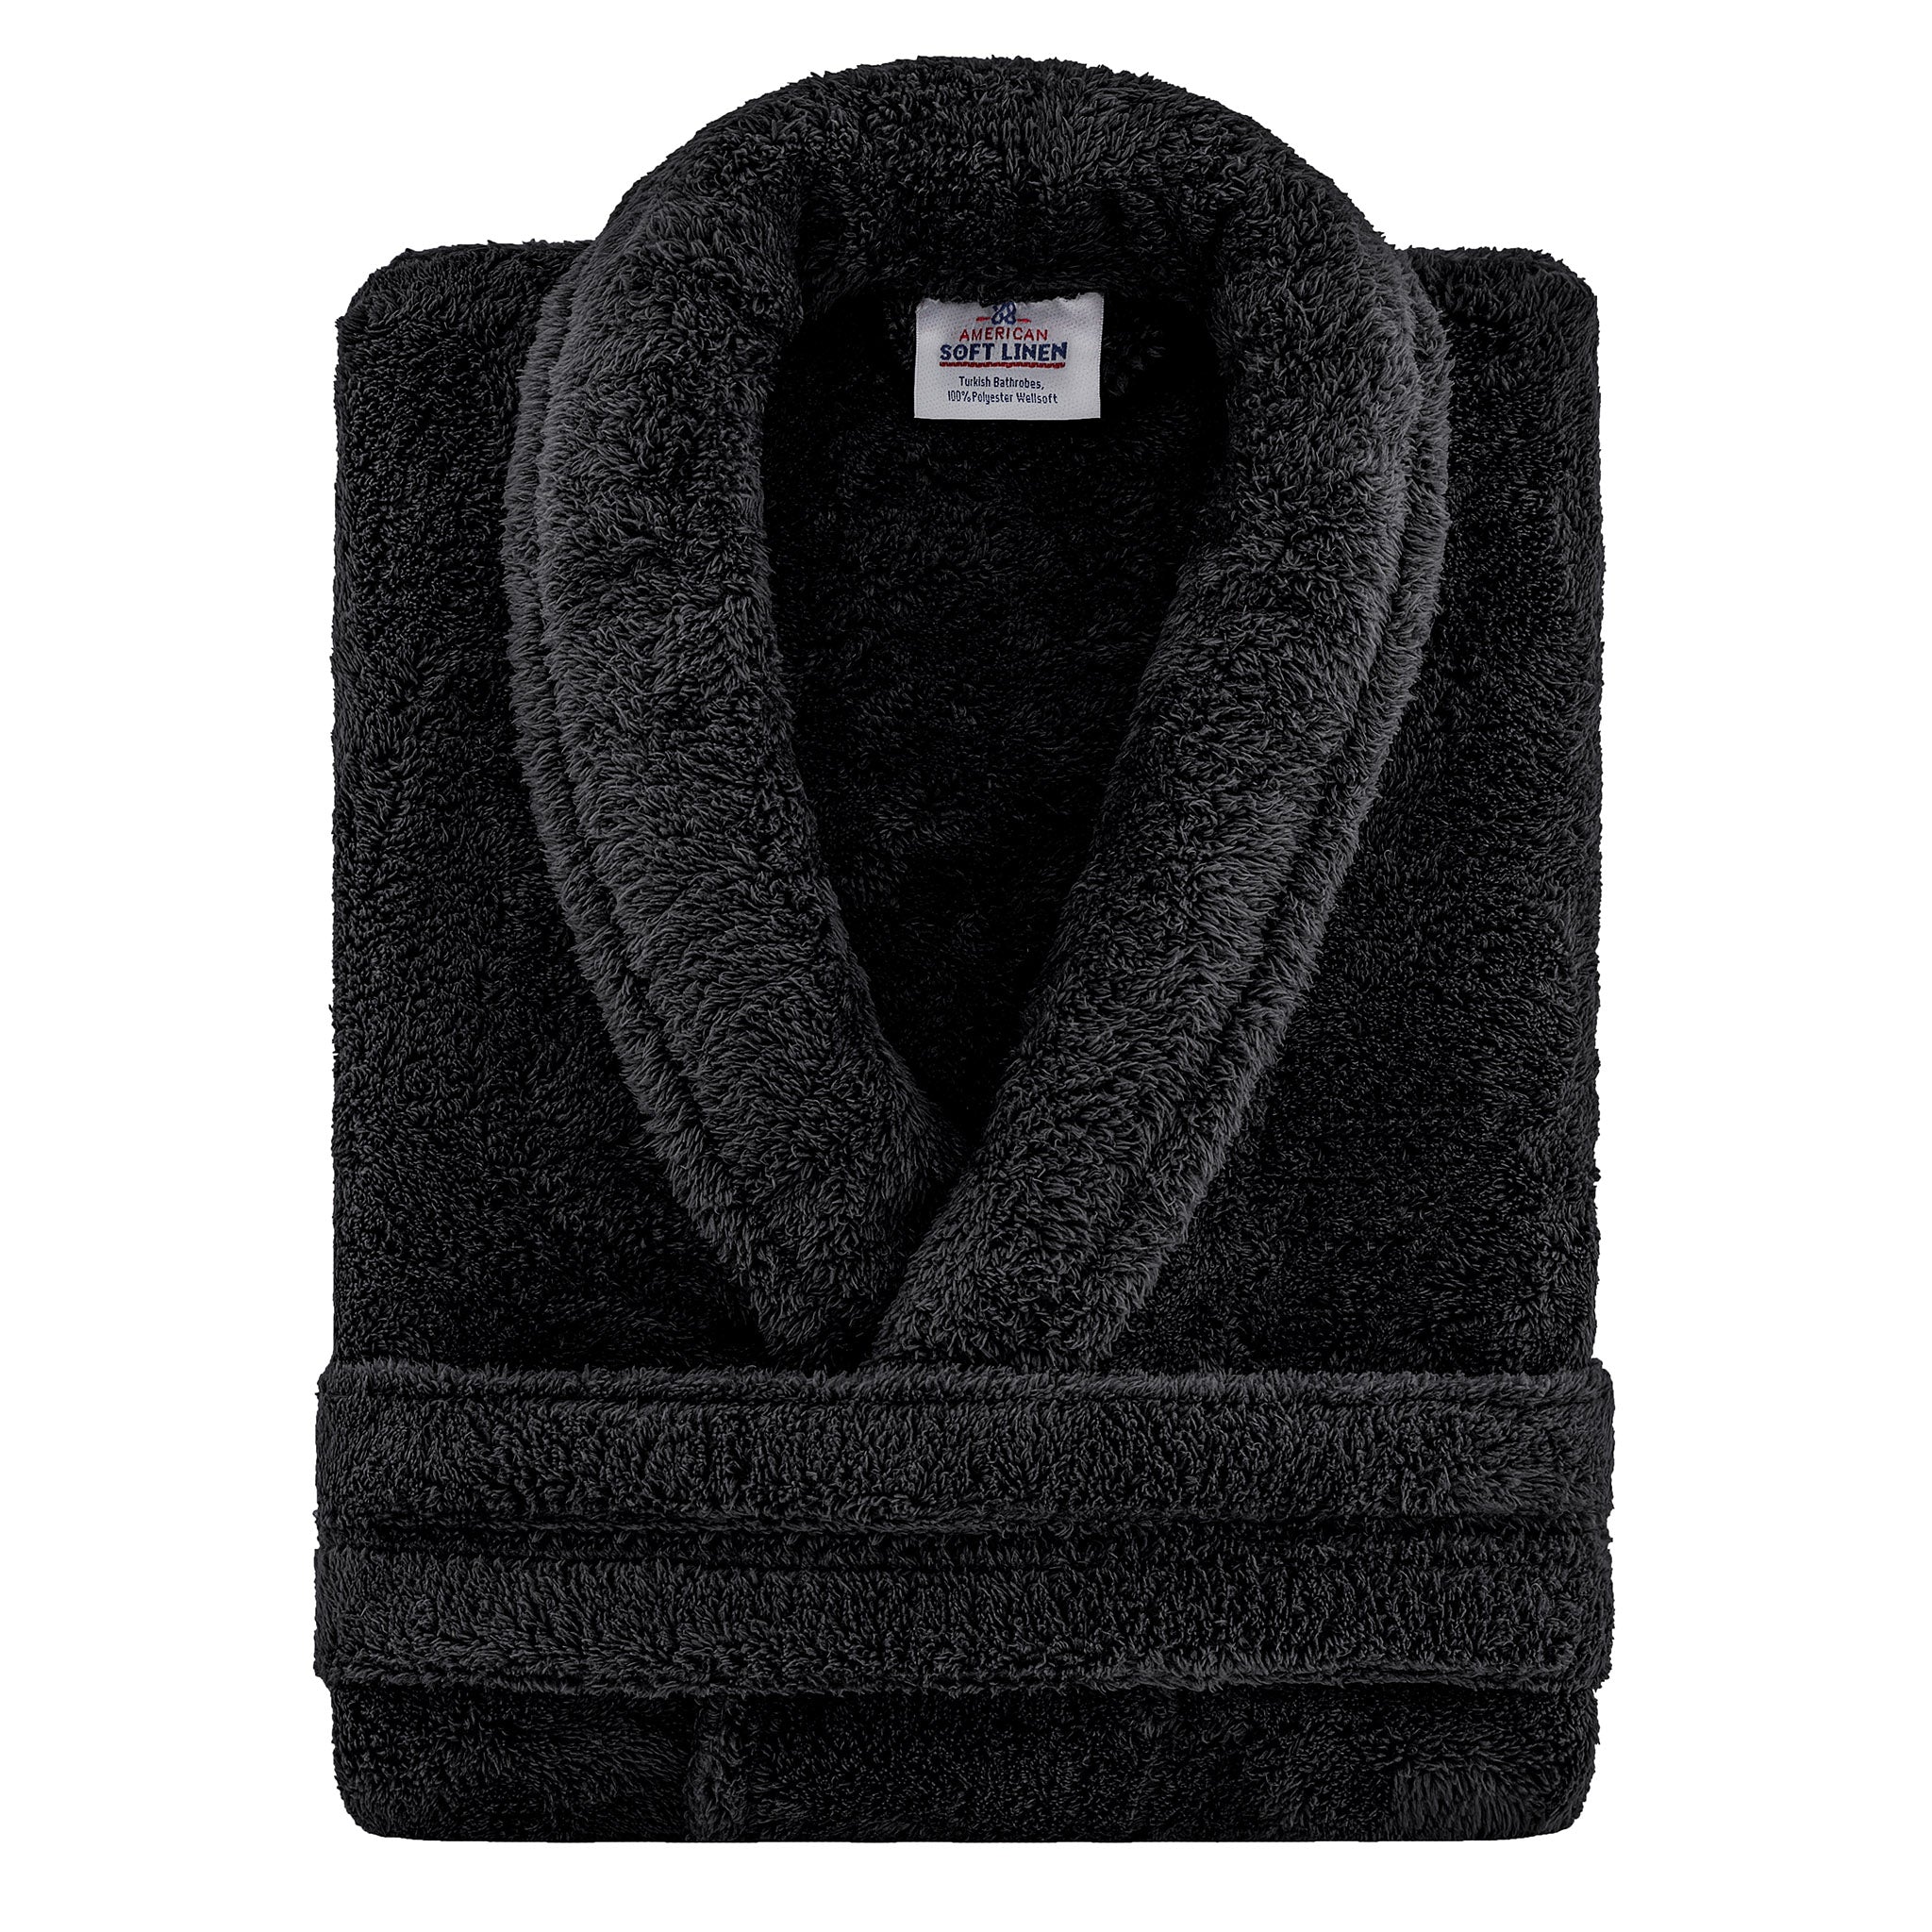 American Soft Linen Super Soft Absorbent and Fluffy Unisex Fleece Bathrobe -12 Set Case Pack -L-XL-black-3